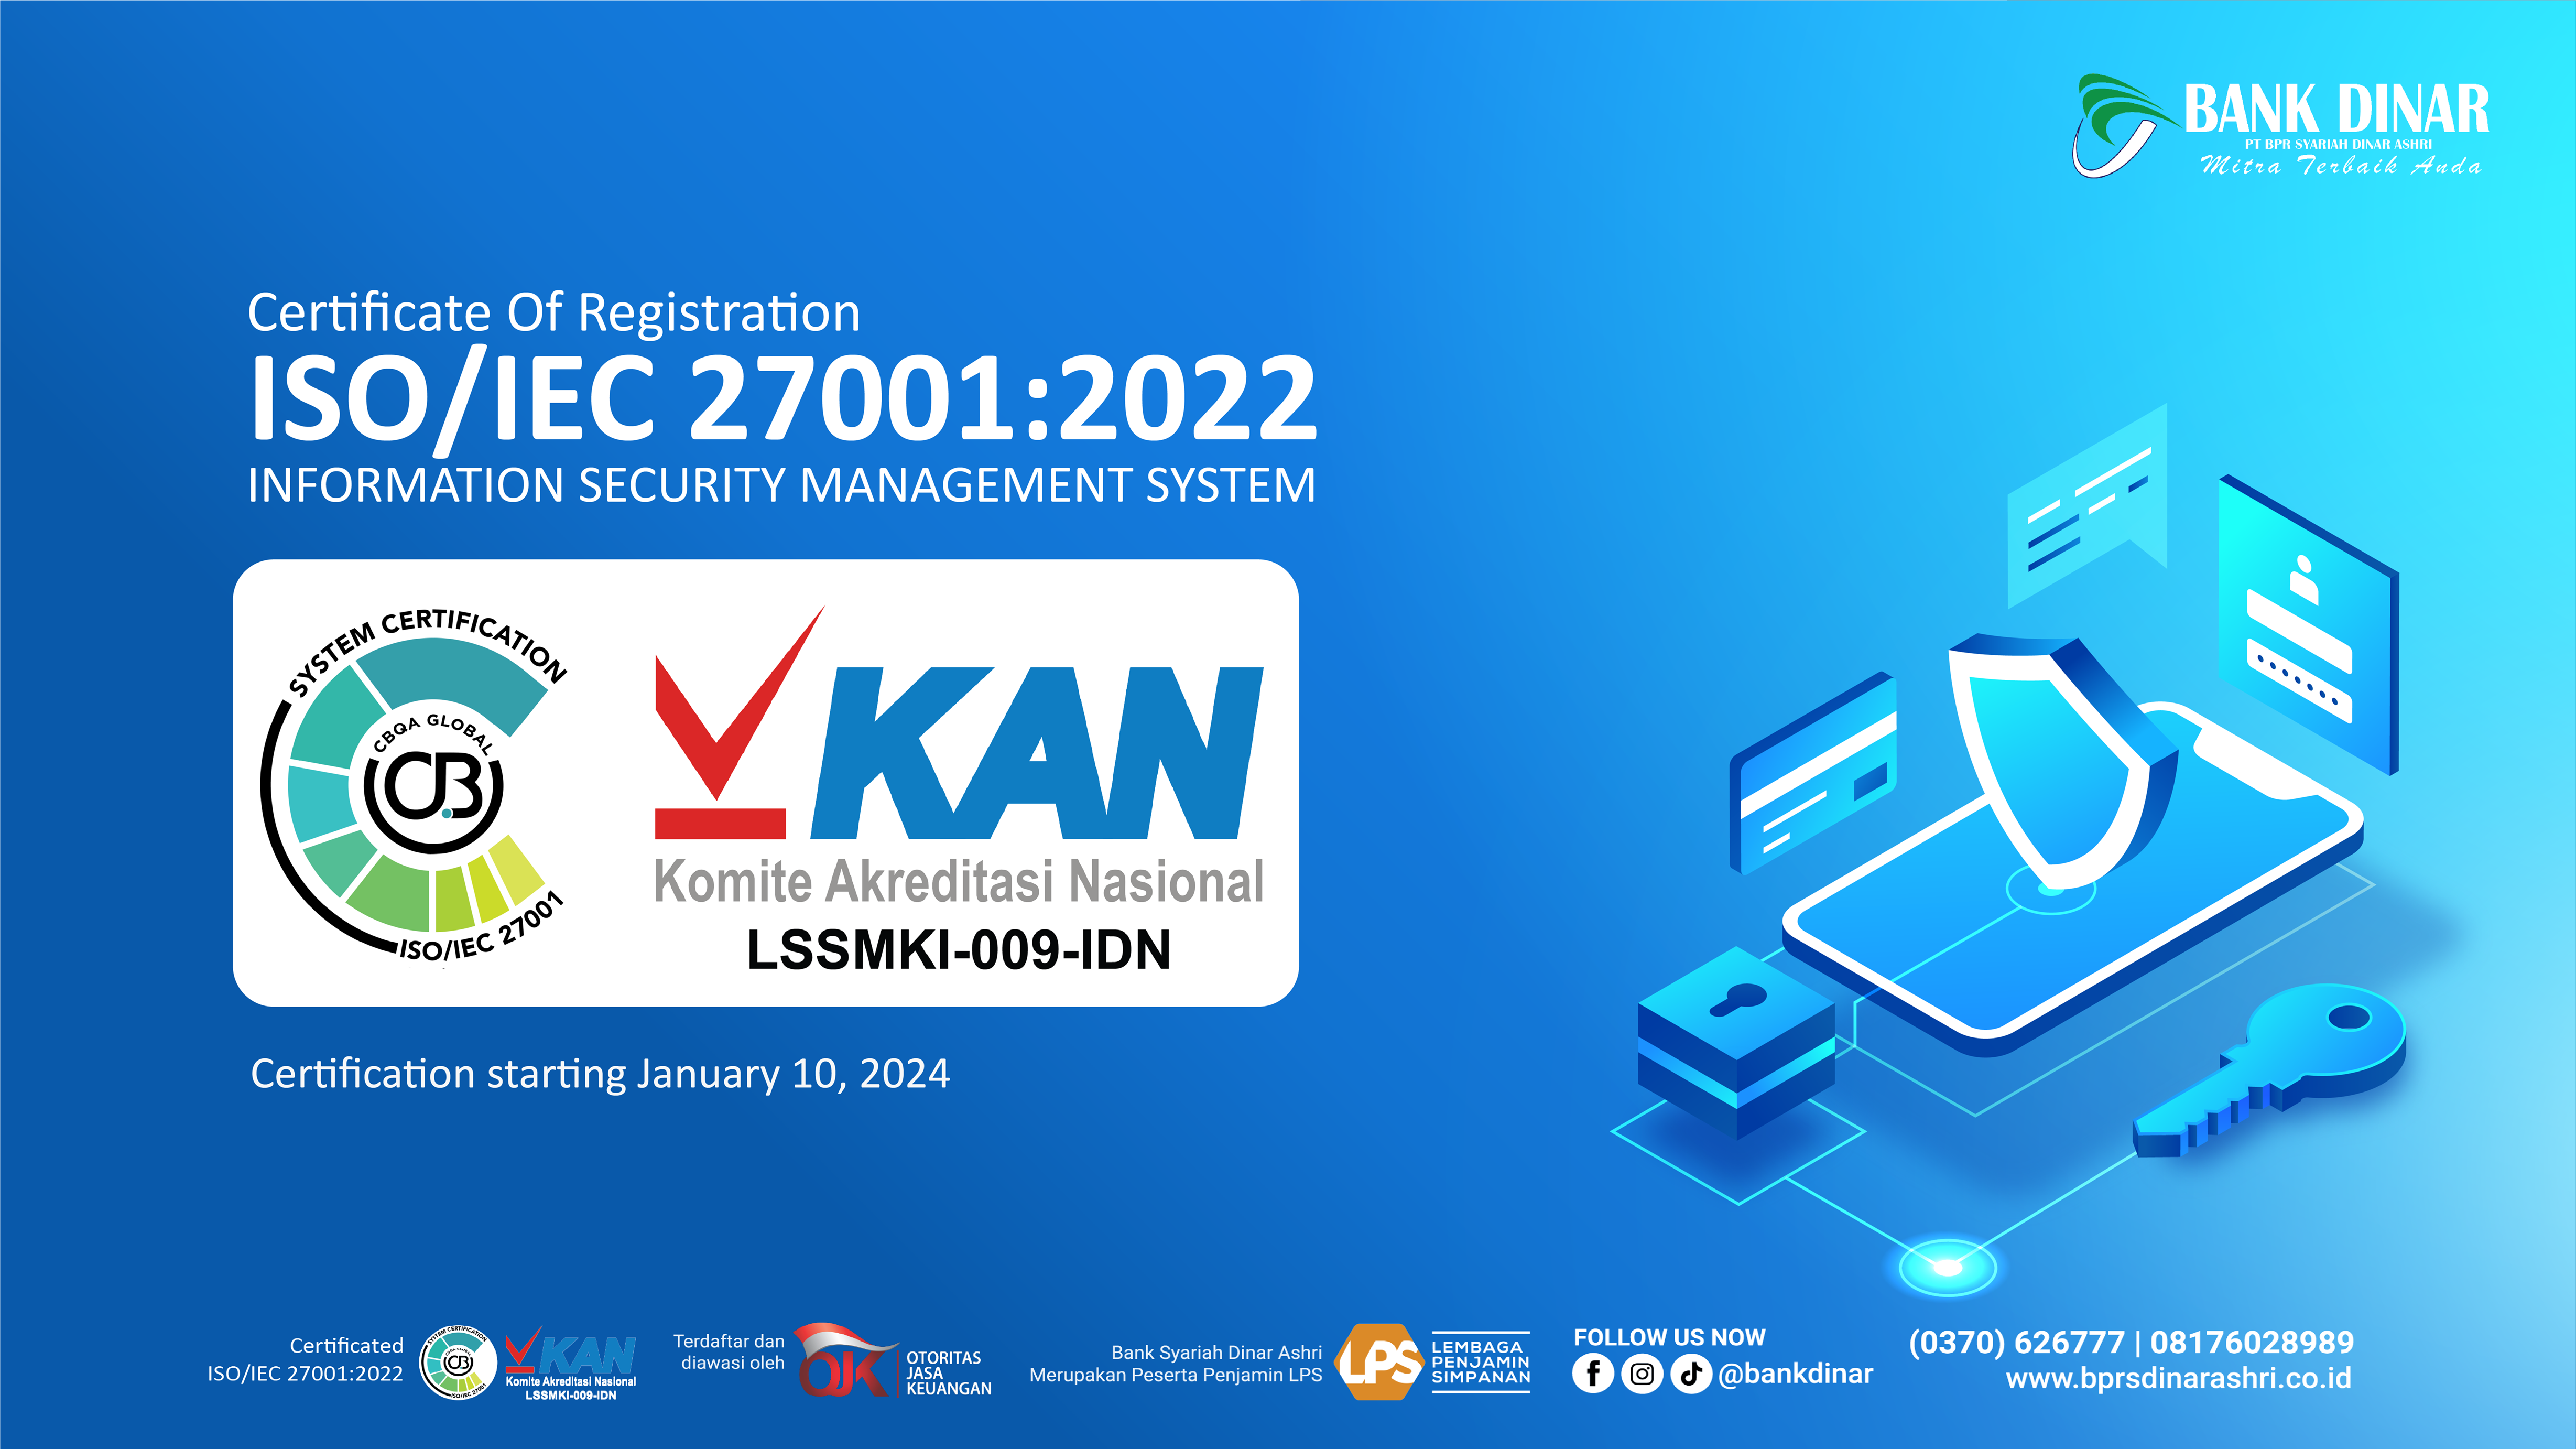 BANK DINAR KINI BERSERTIFIKAT "ISO 27001:2022 INFORMATION SECURITY MANAGEMENT SYSTEM"